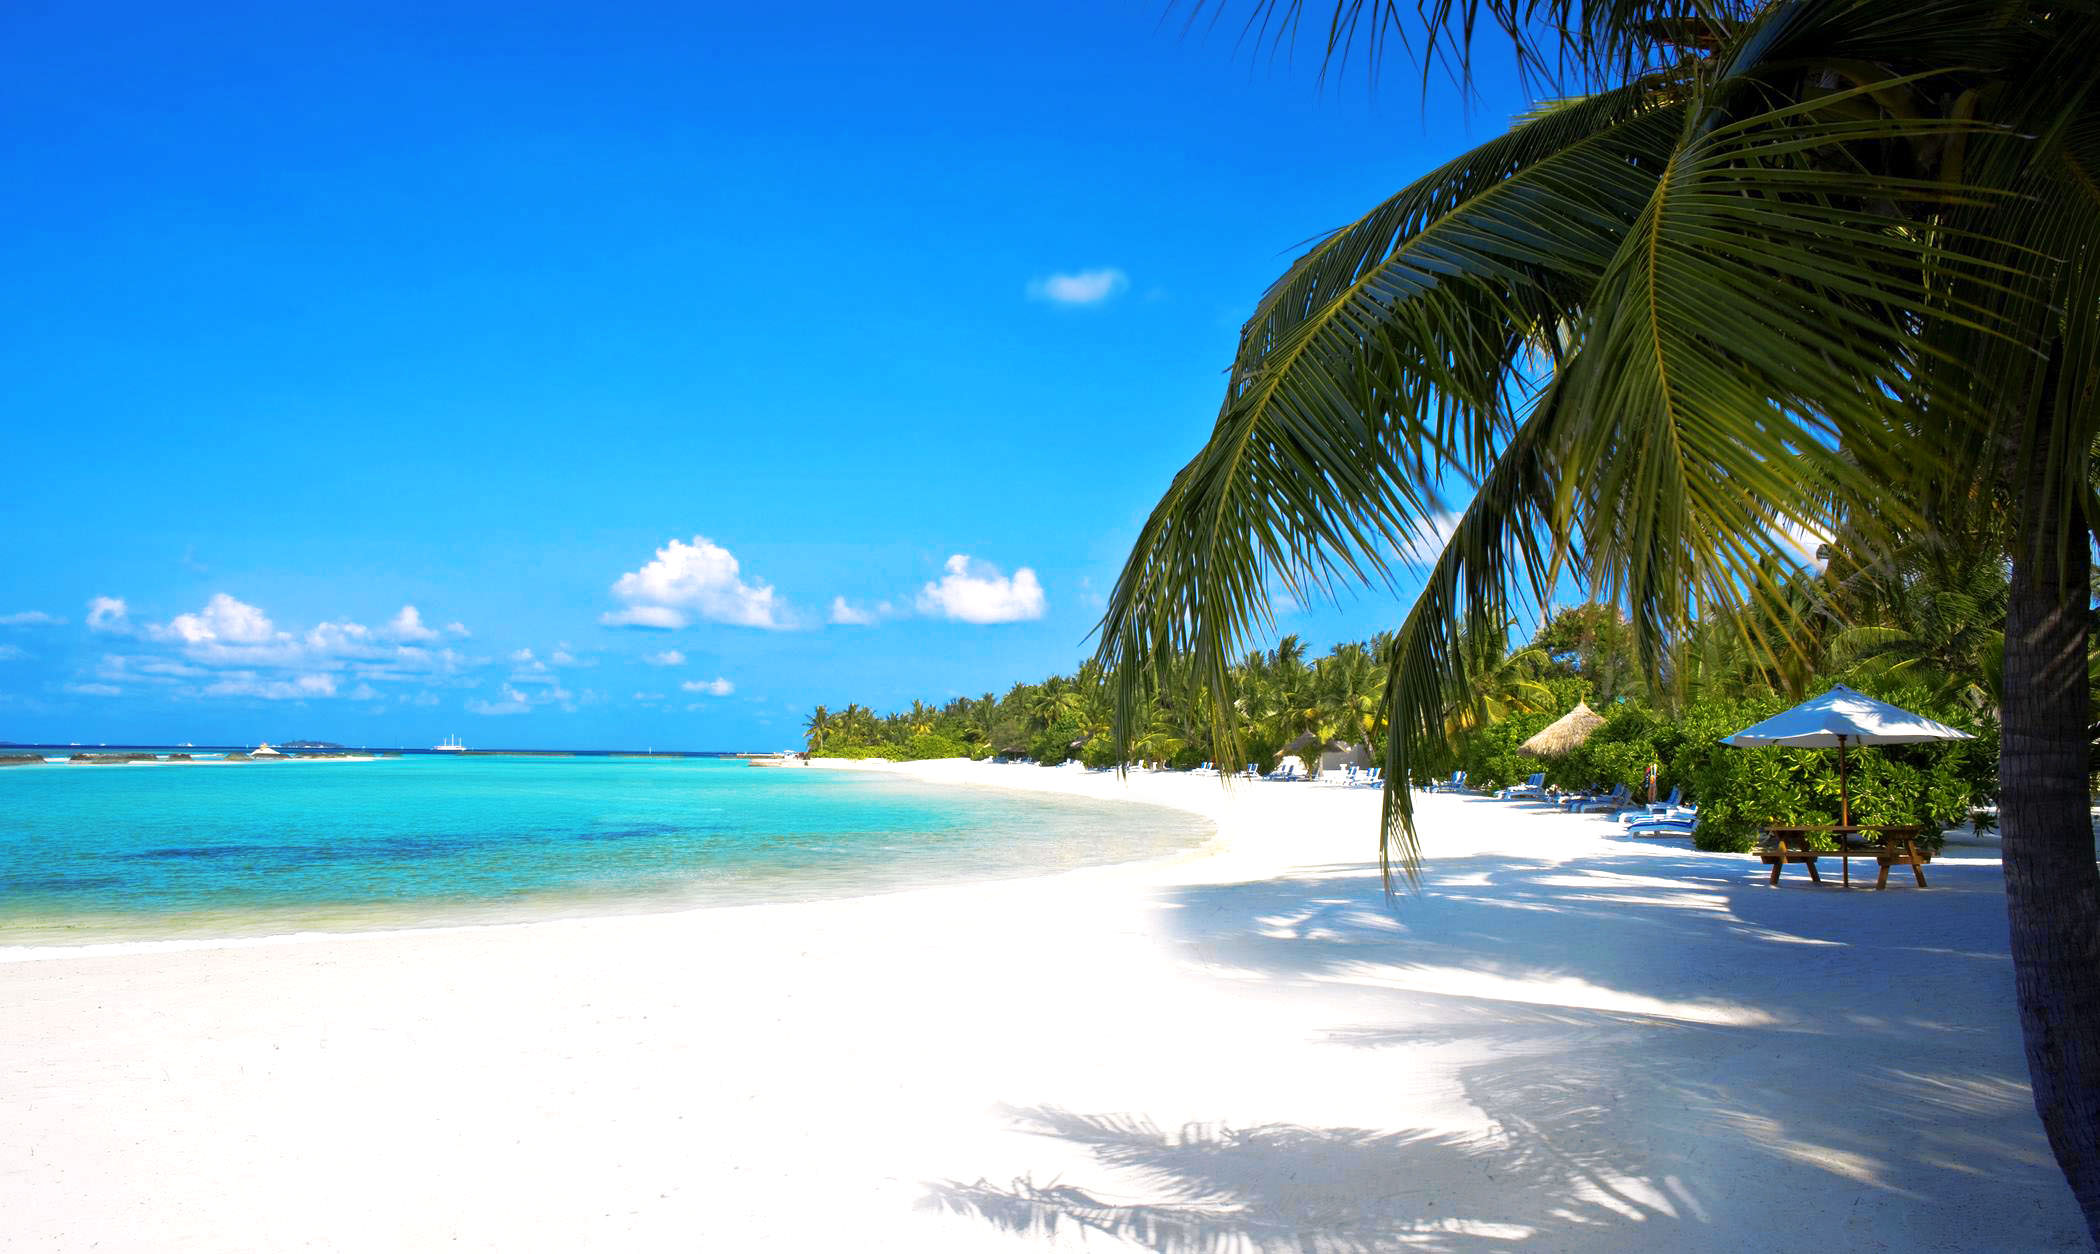 fond-ecran-hd-paysage-plage-tropicale-sable-blanc-palmier-mer-turquoise-wallpaper-beach-picture-image-2.jpg